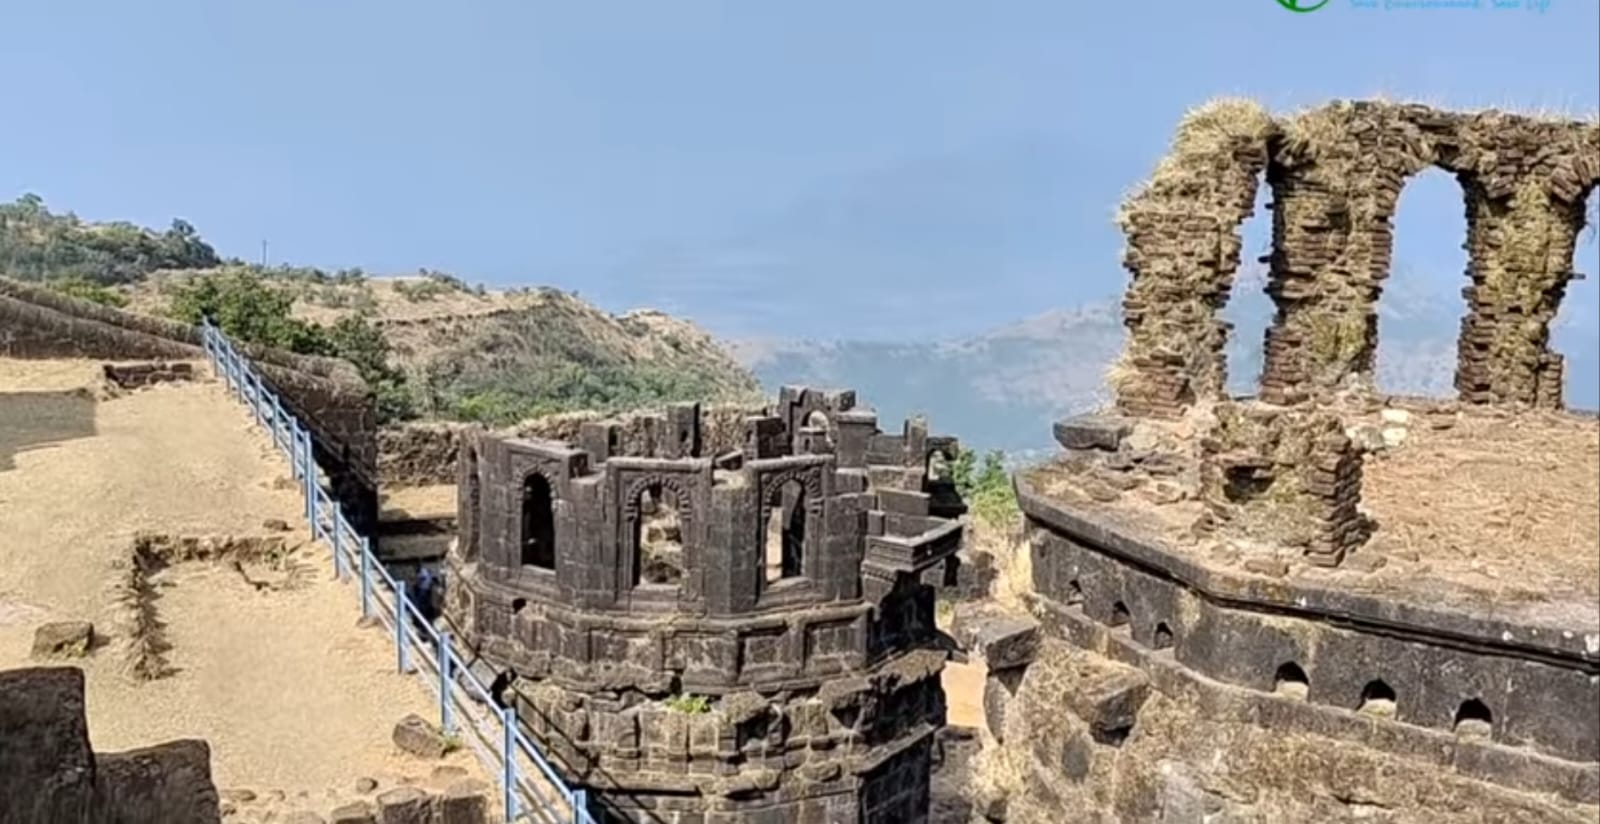 Raigad Fort